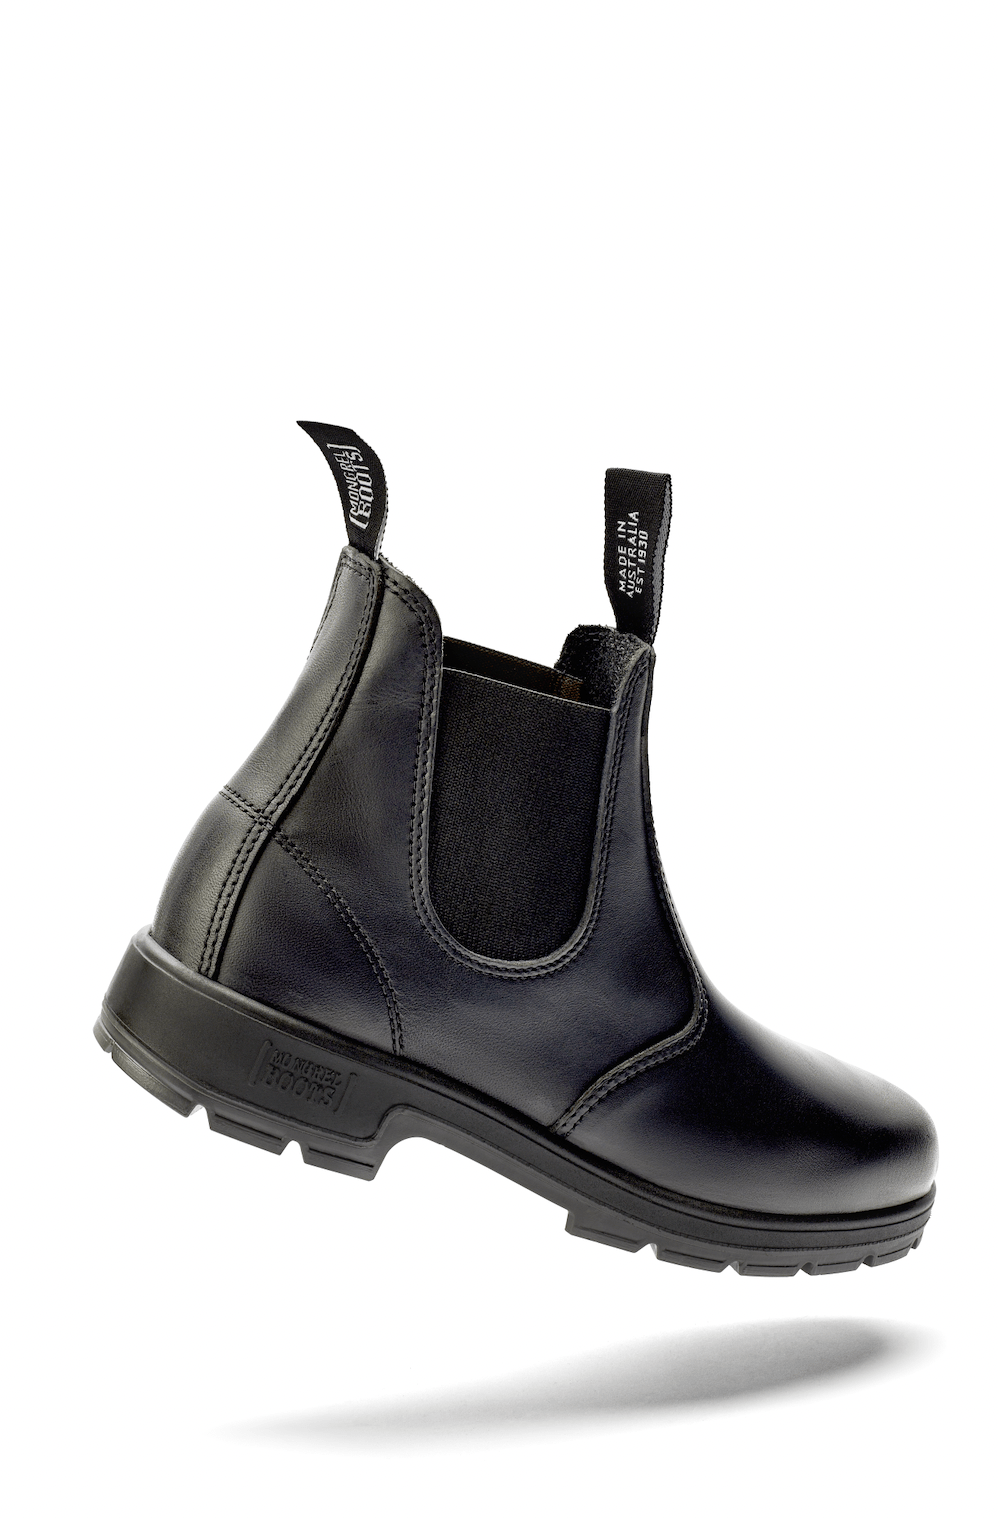 Mongrel K9 Non Safety Work Boot - Black - BIG Boots UK